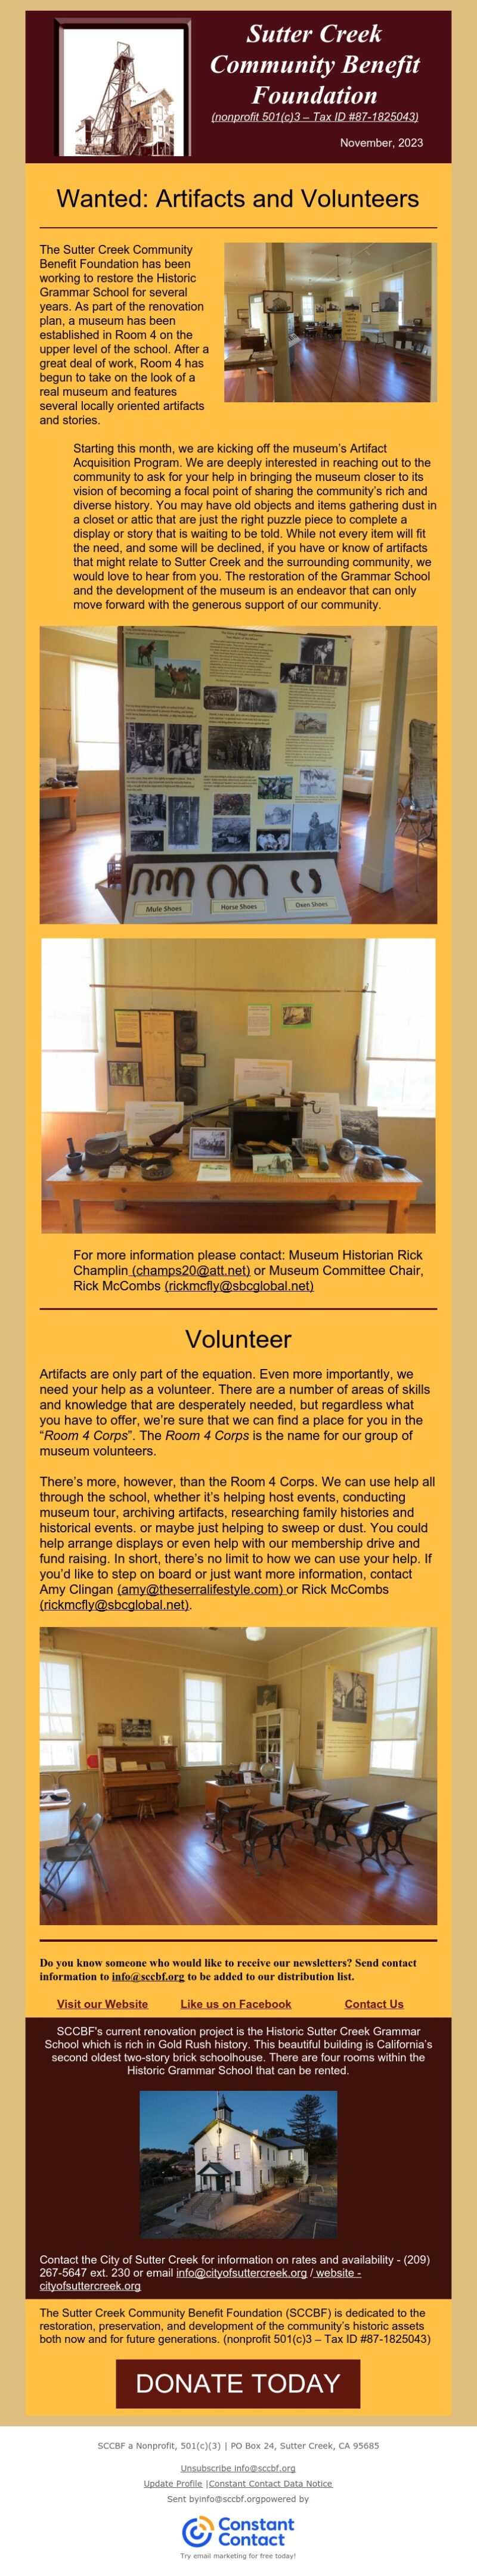 Wanted: Artifacts & Volunteers